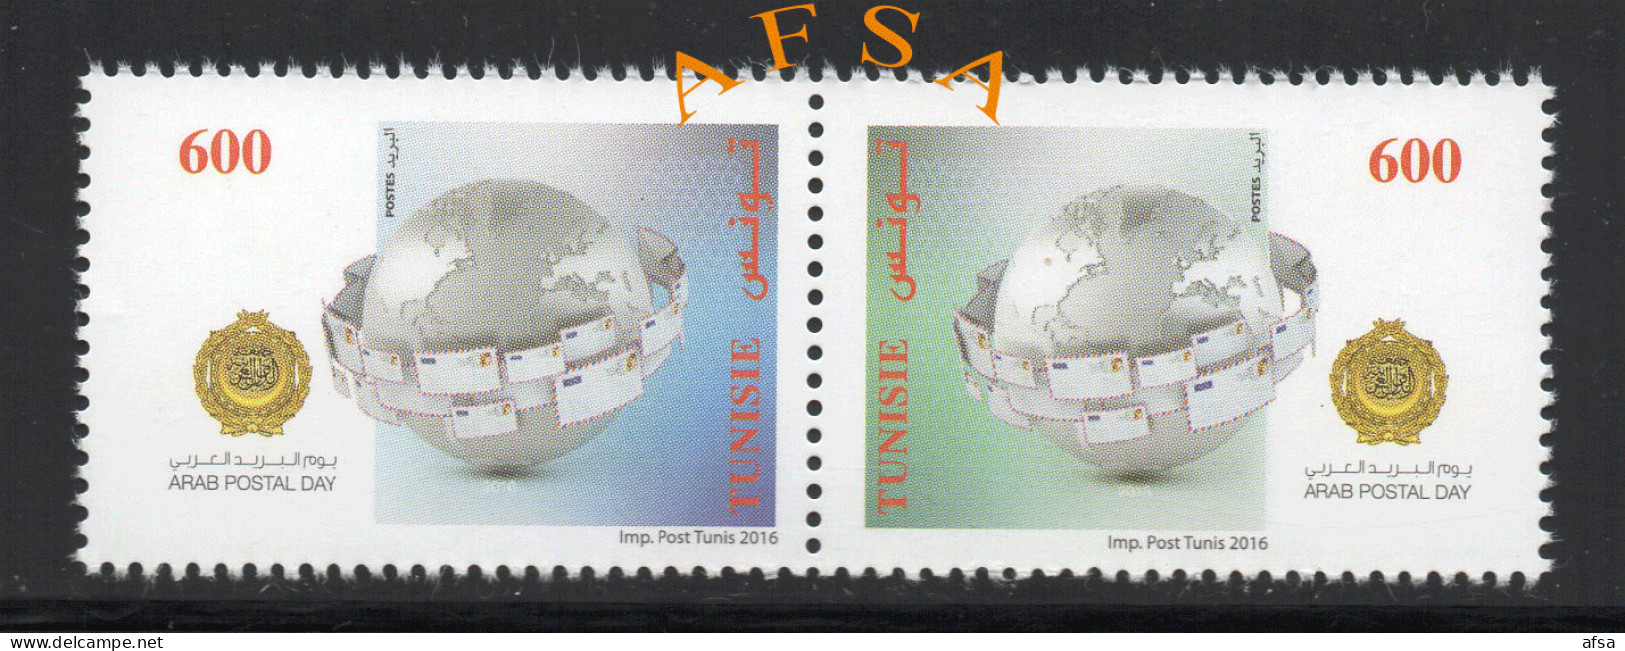 Tunisia 2016-Arab Postal Day-(Pair) Joint Issue With Egypt,Jordan,Bahrain,UAE.Lebanon,irak - Ungebraucht